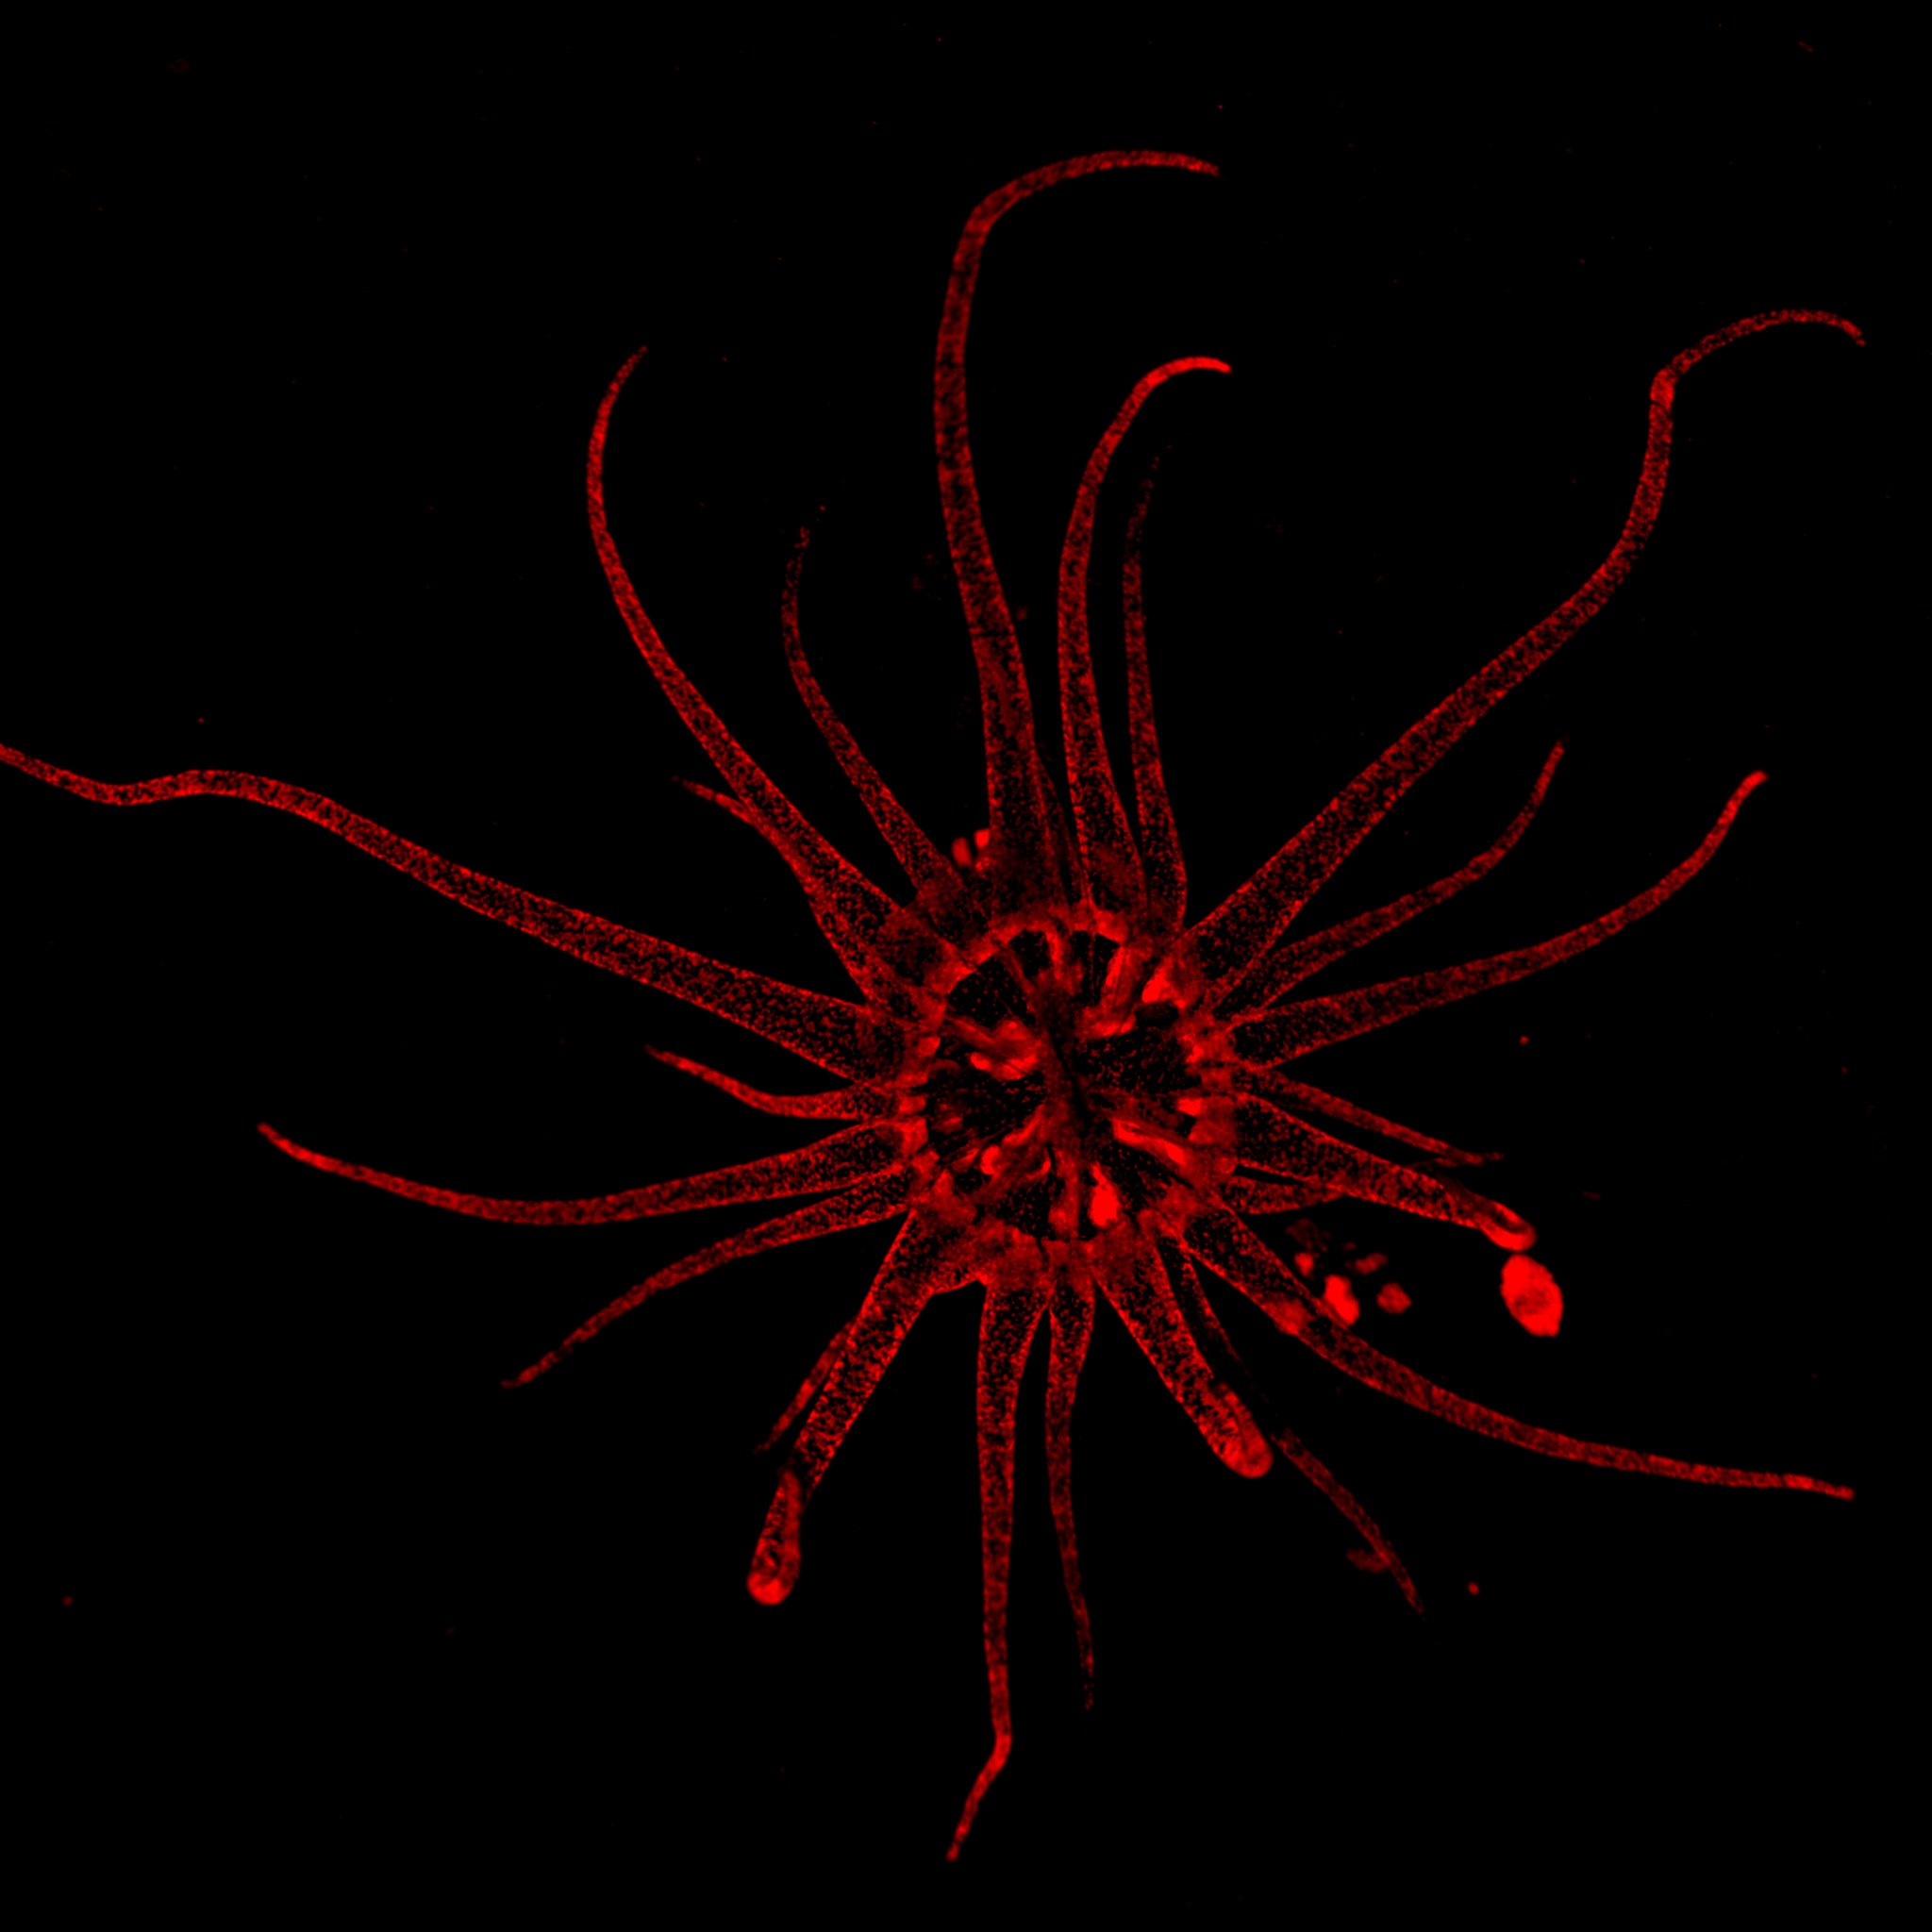 A fluorescence image of the sea anemone Exaiptasia, courtesy of Tingting Xiang